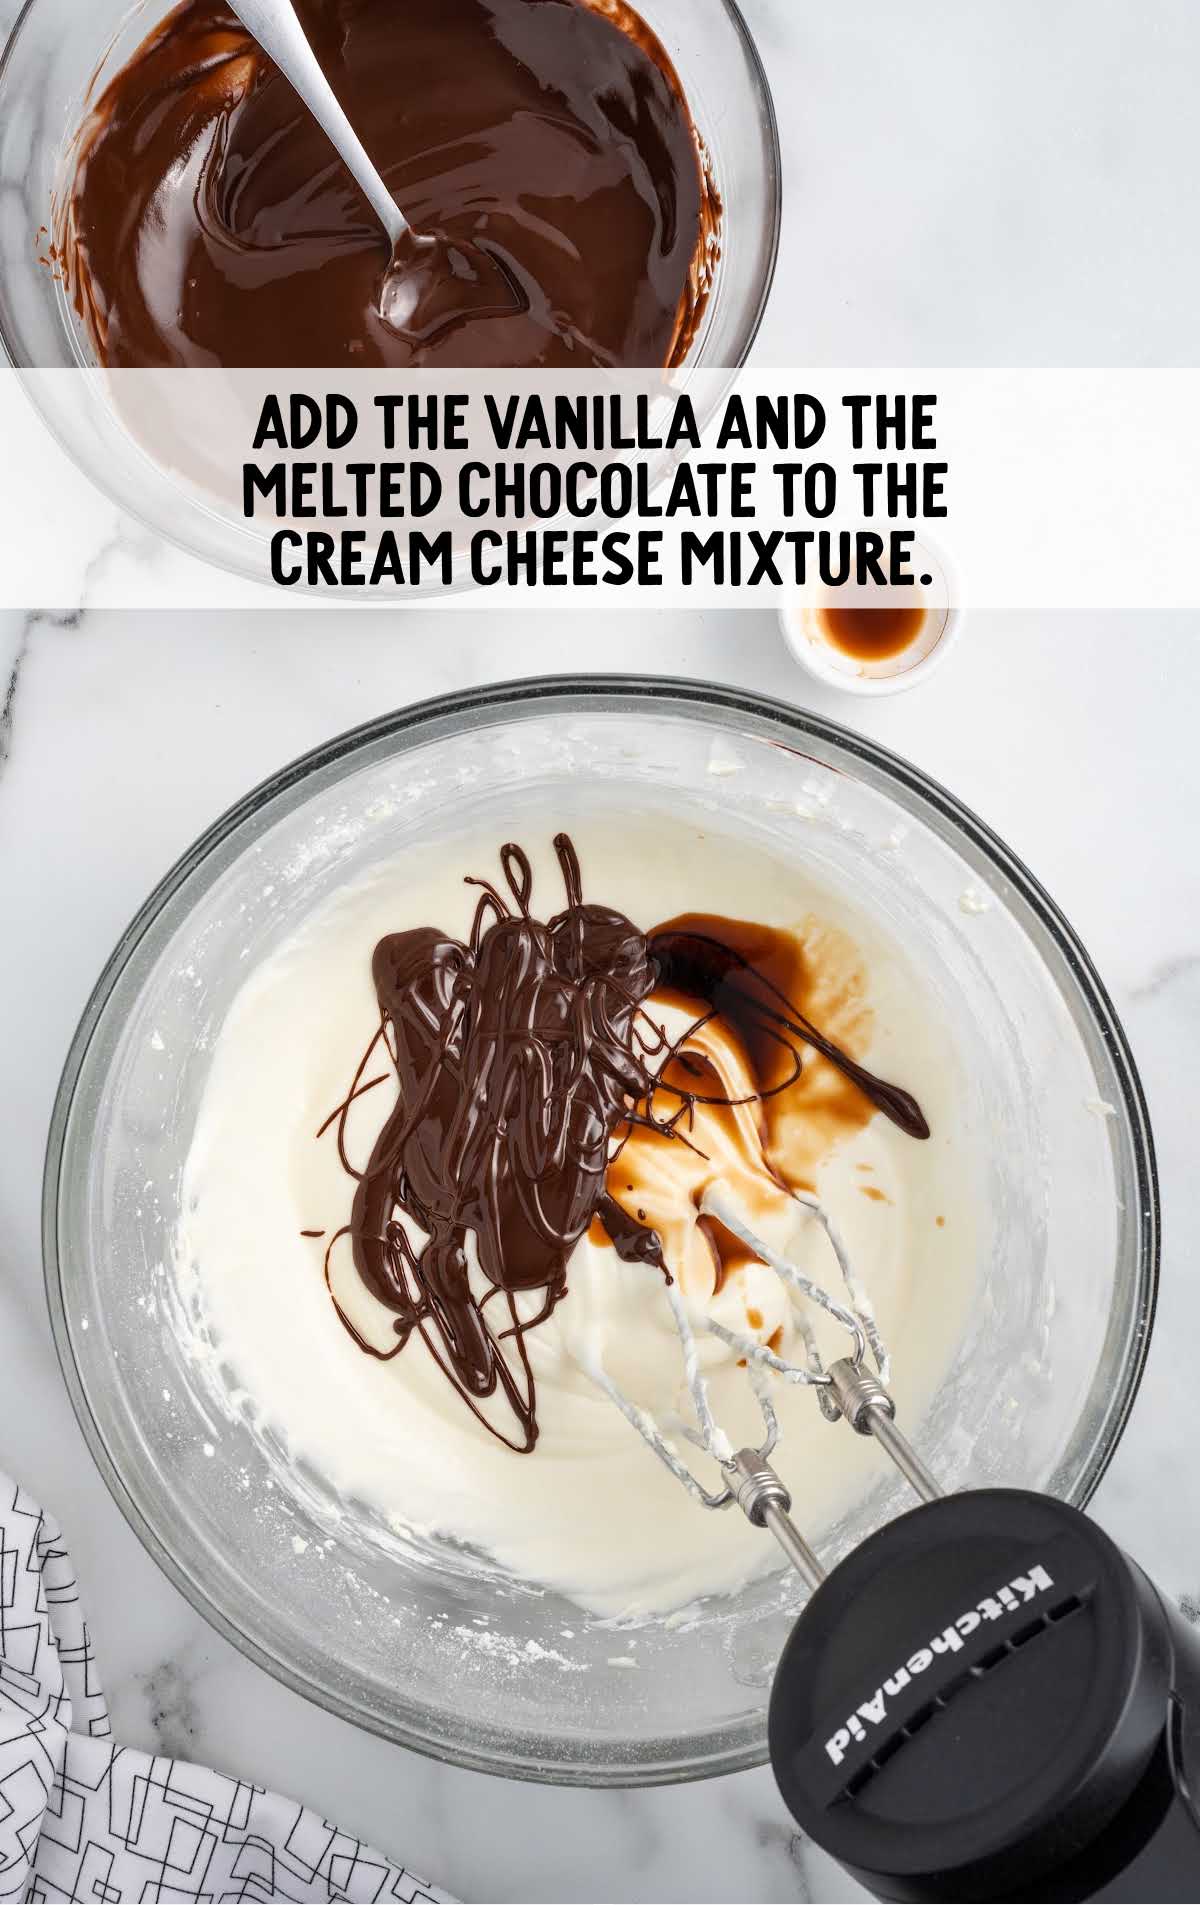 vanilla and chocolate added to the cream cheese mixture